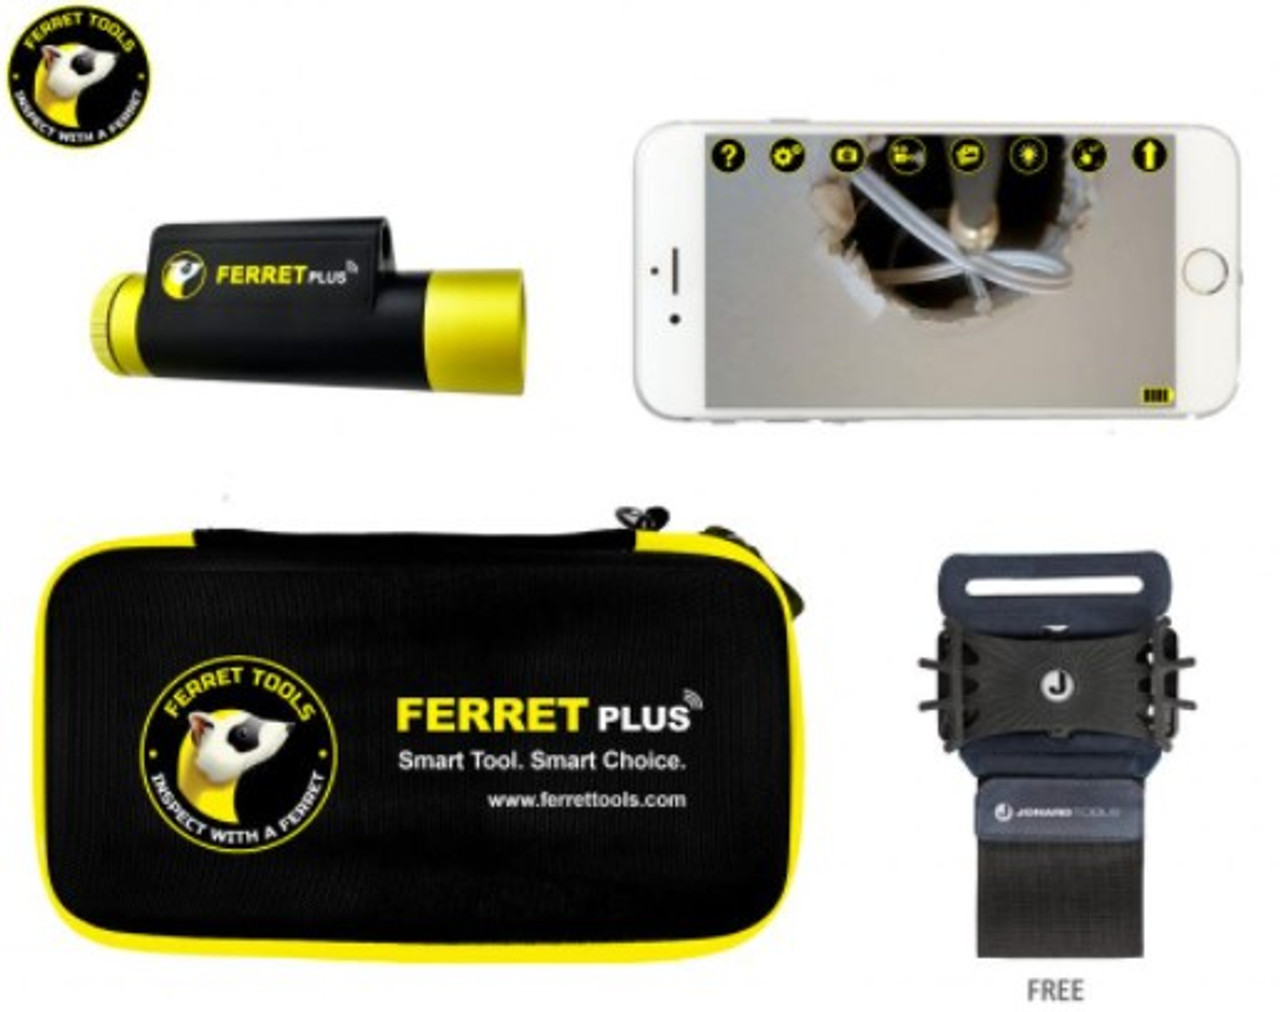 Ferret Plus - Multipurpose Wireless Inspection Camera & Cable Pulling Tool